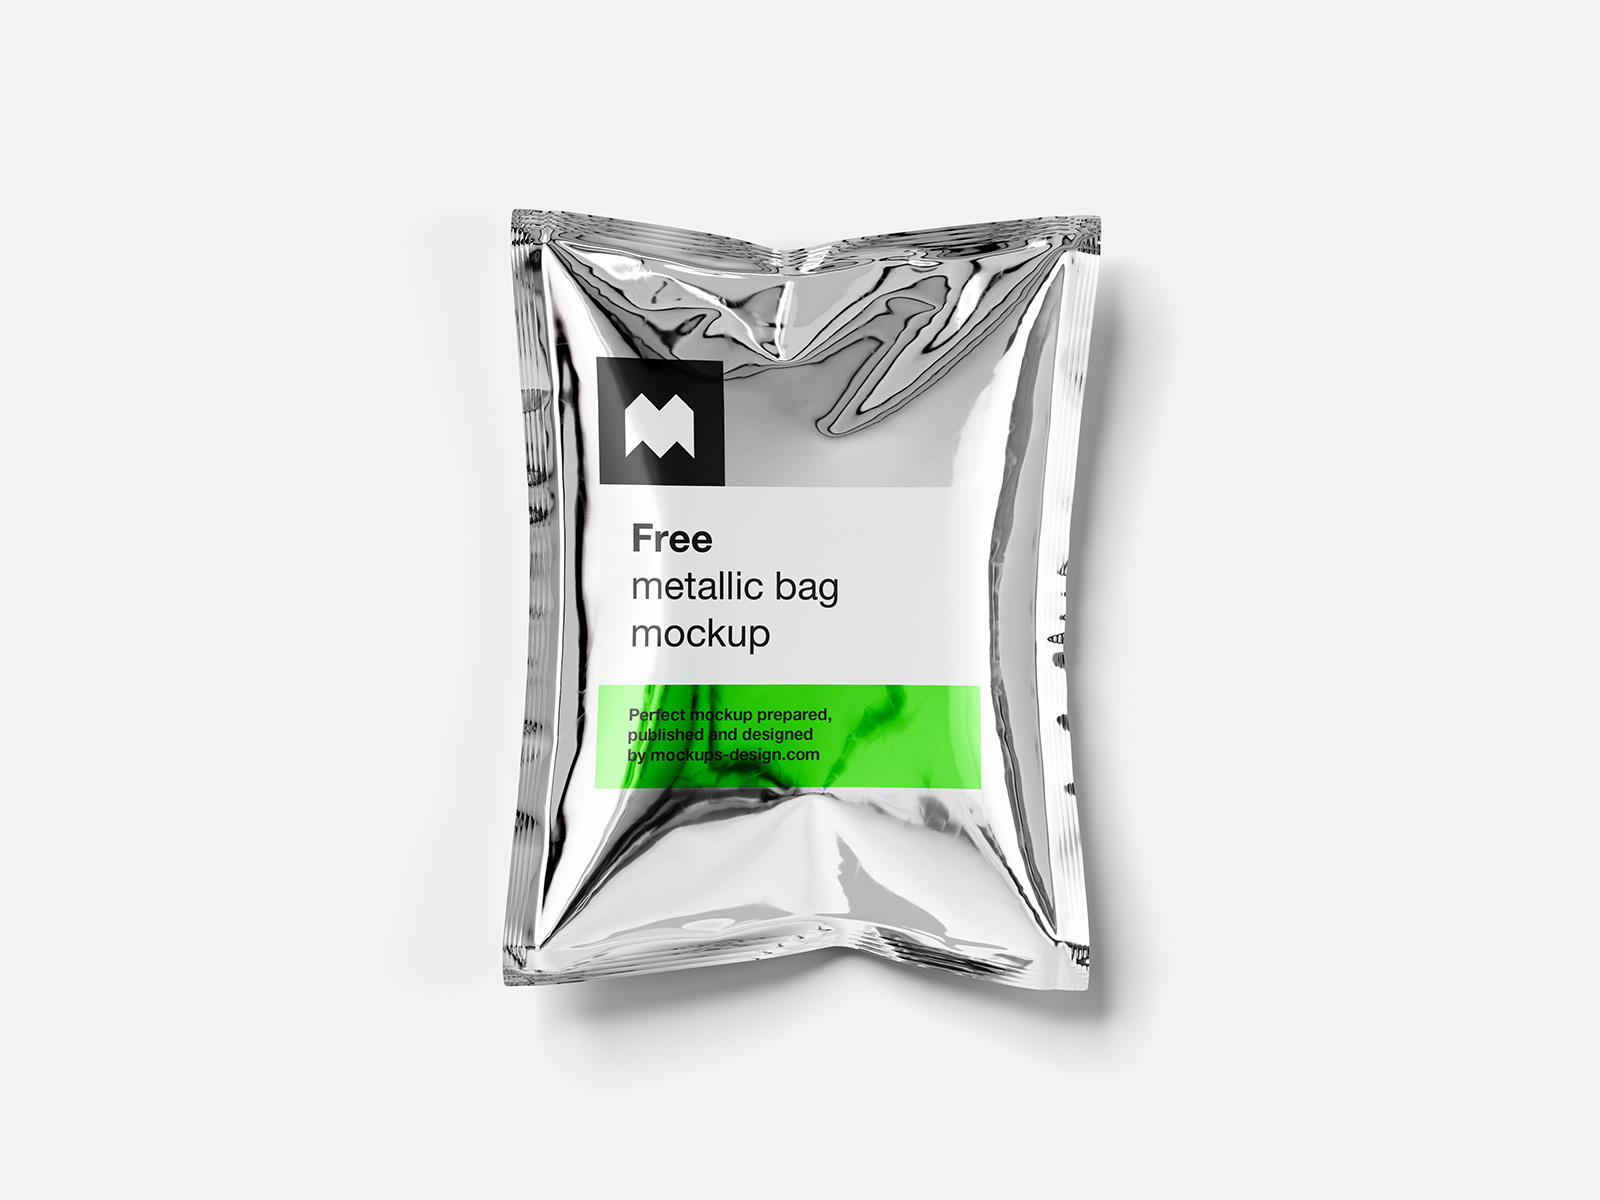 Free metallic bag mockup